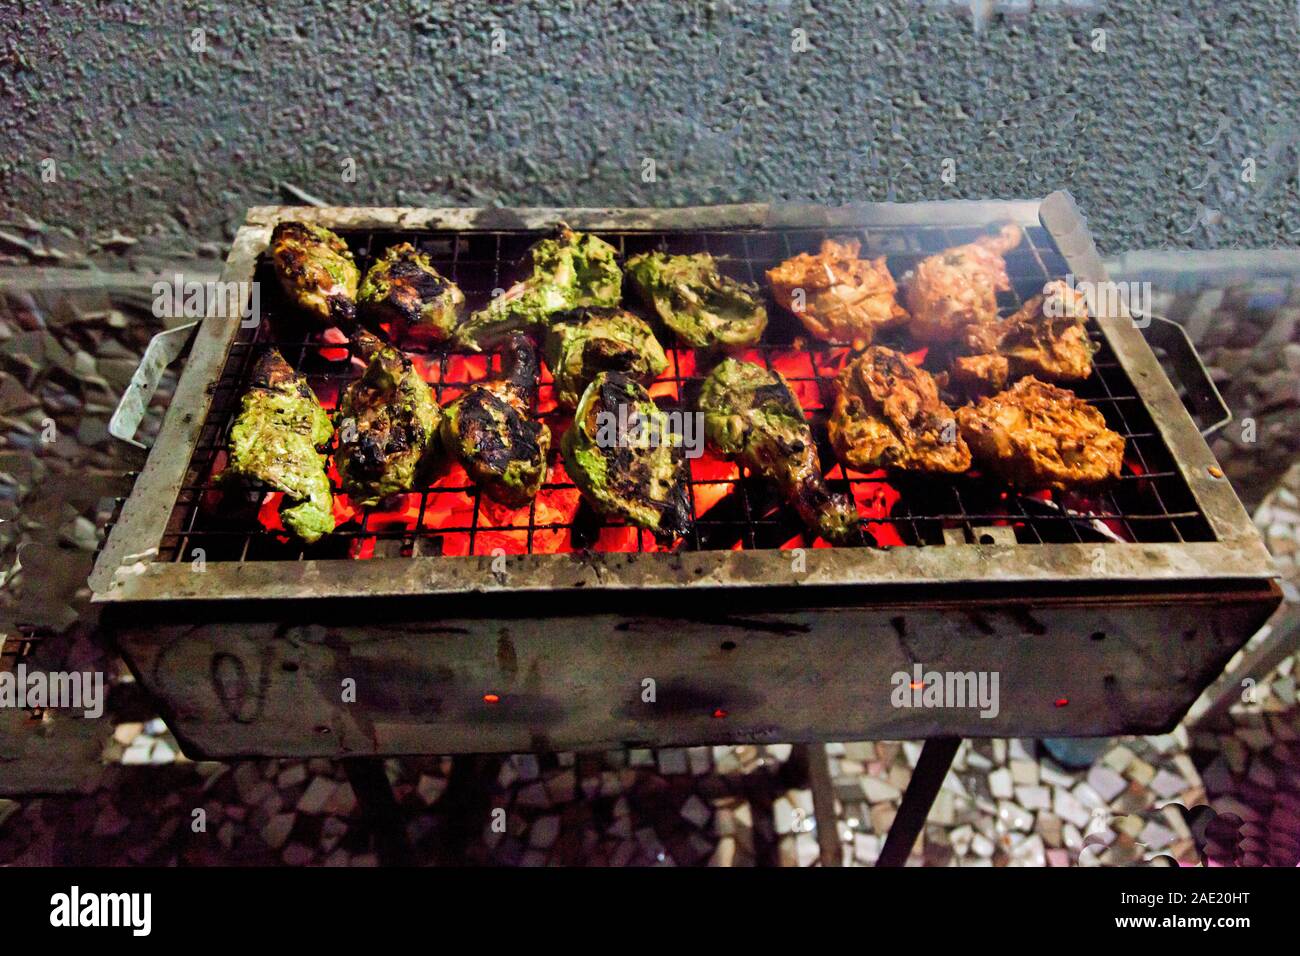 Barbecue charcoal chicken, Kharghar, Navi Mumbai, Maharashtra, India, Asia Stock Photo